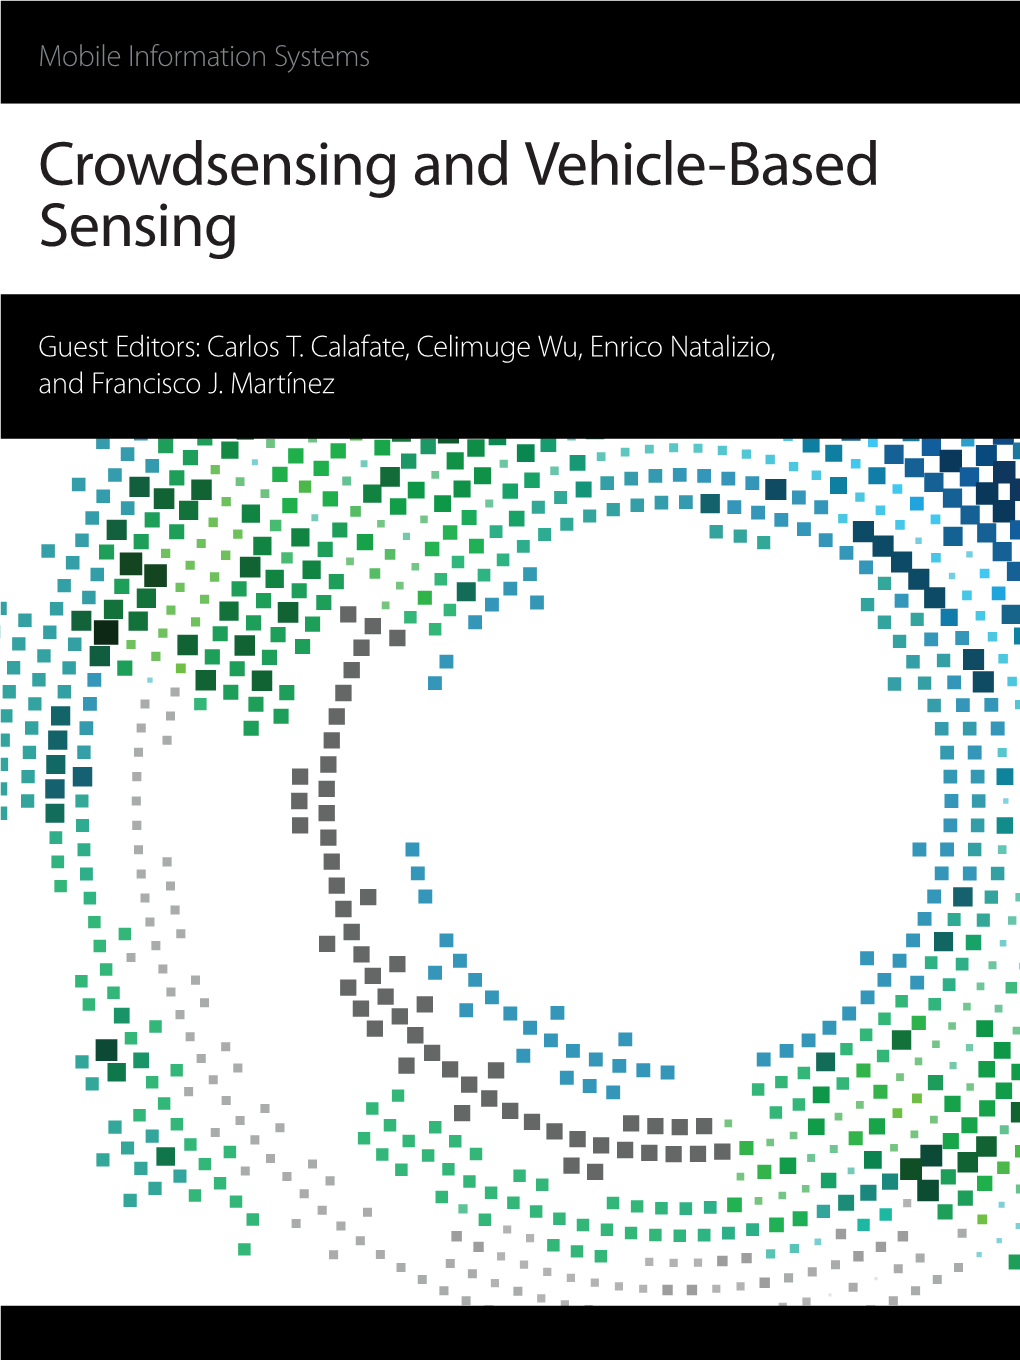 Crowdsensing and Vehicle-Based Sensing